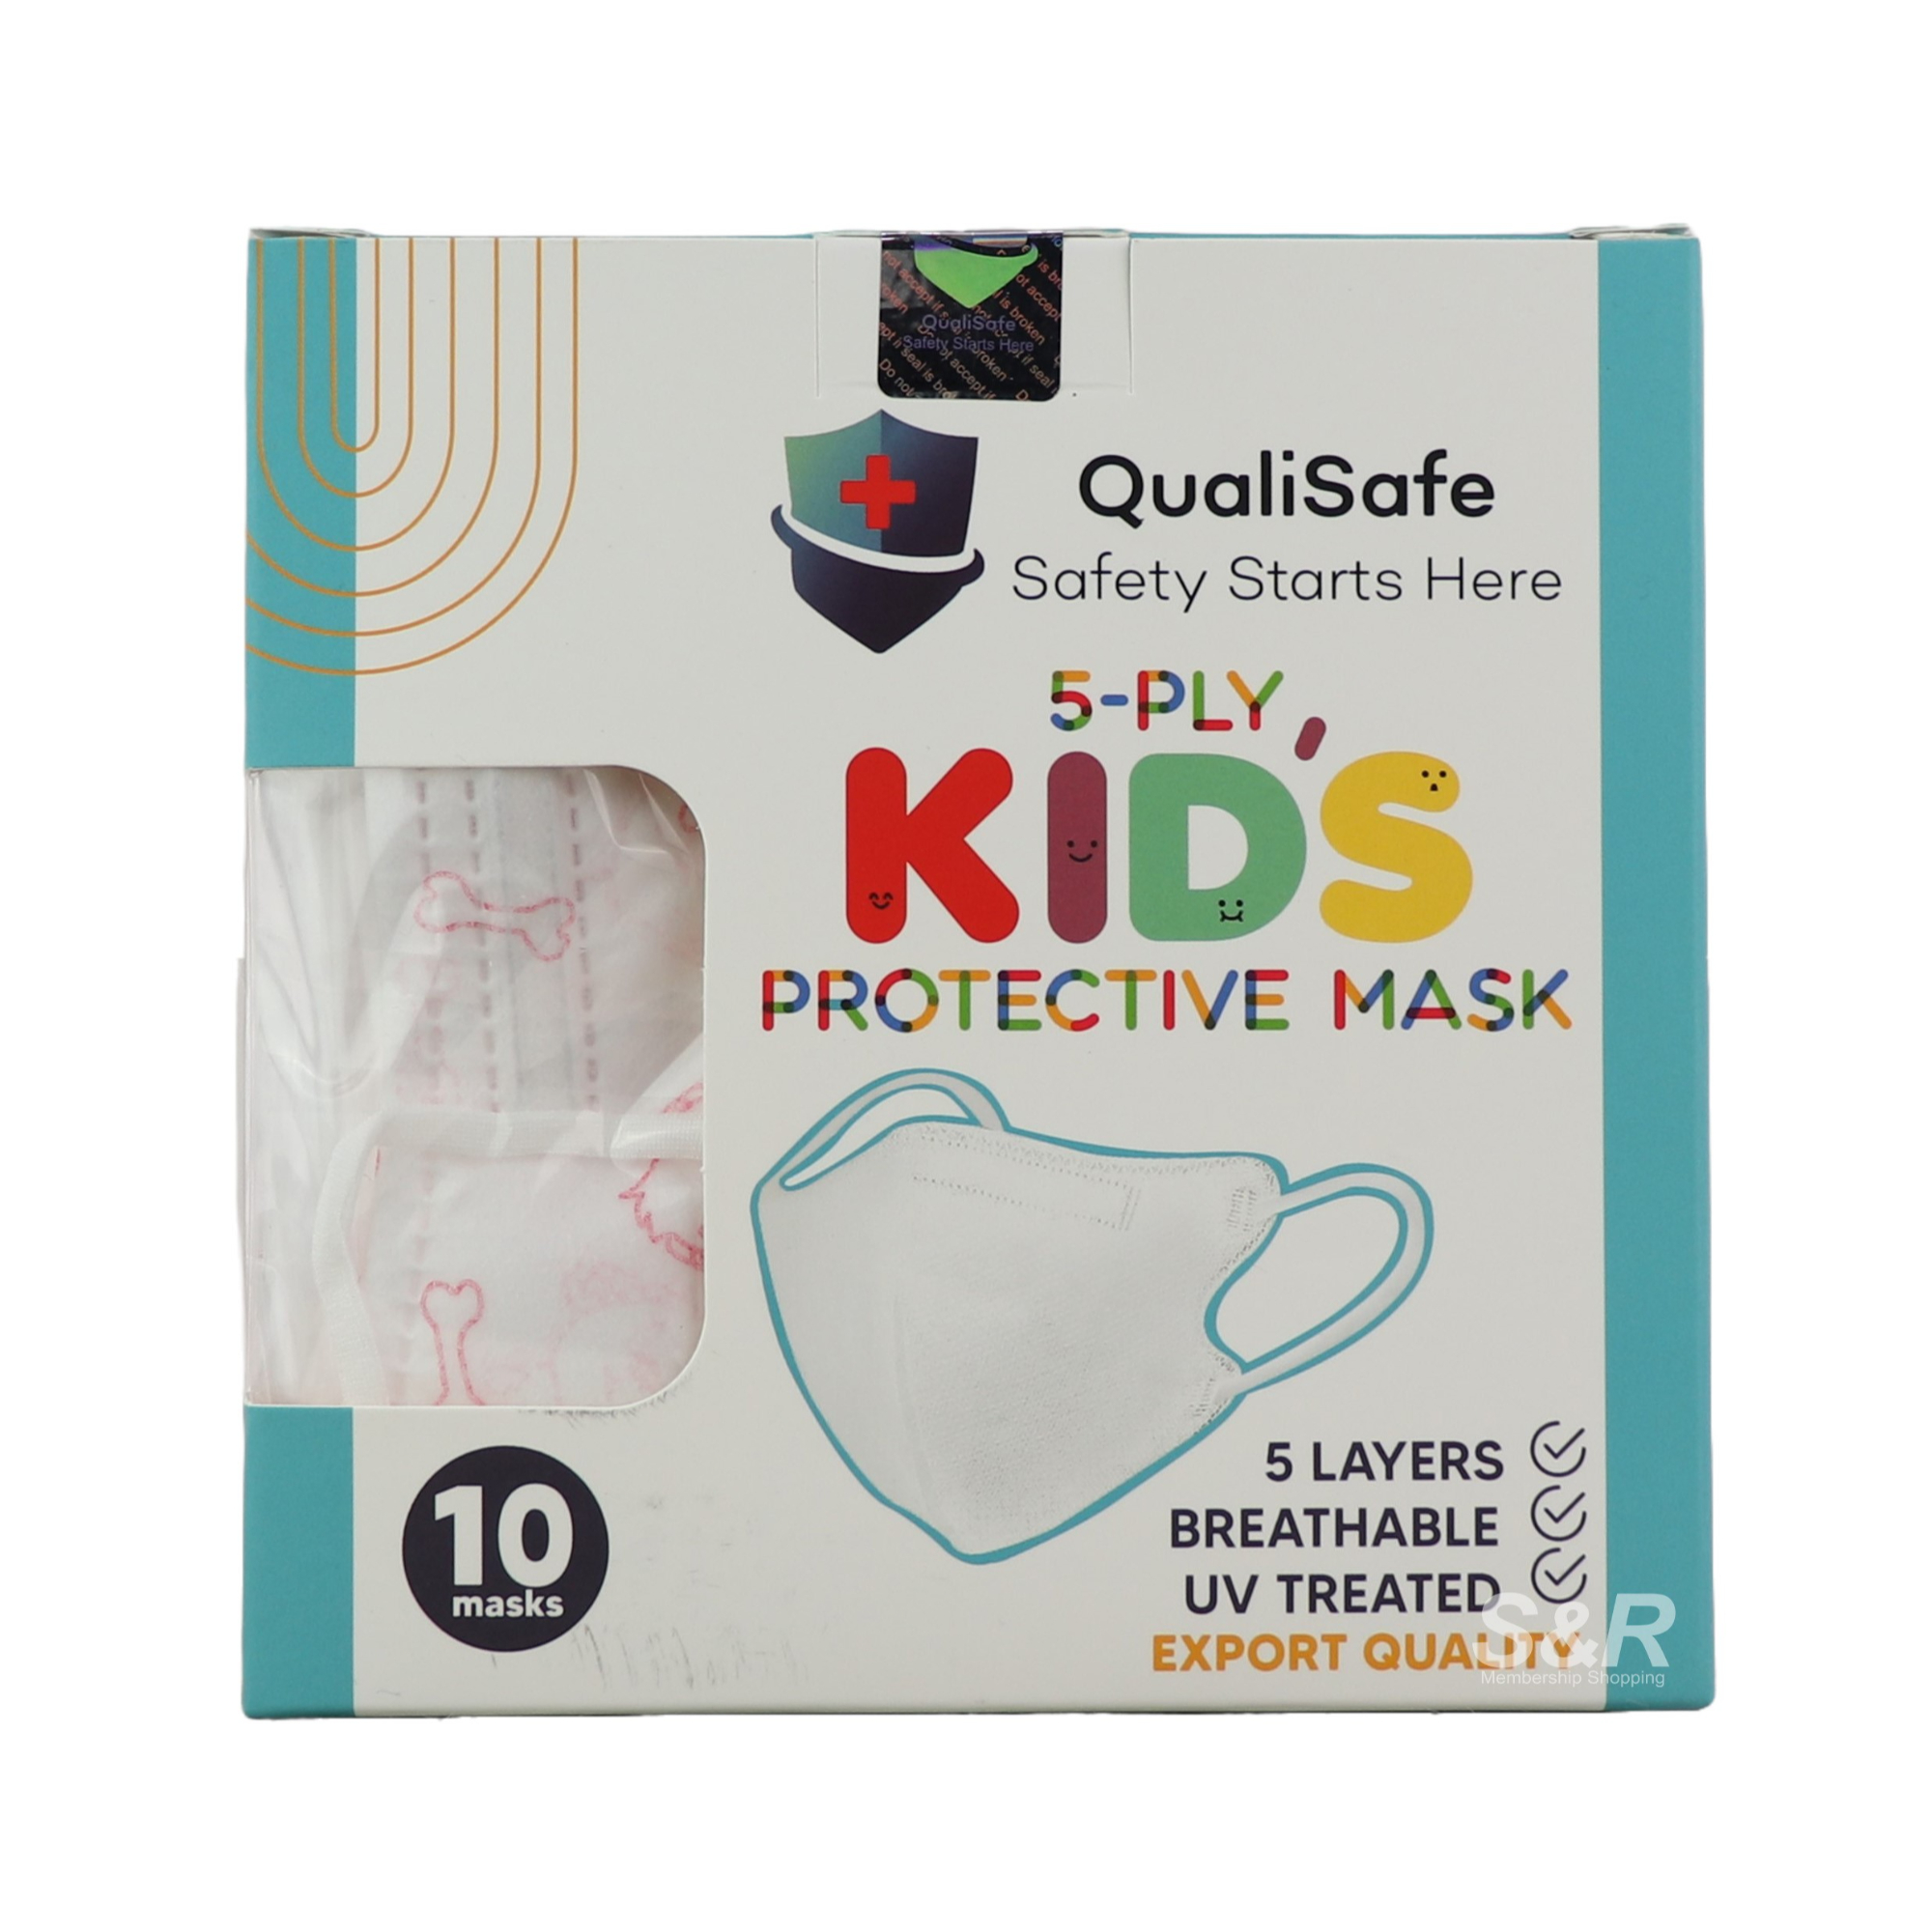 QualiSafe Kids 5-ply Protective Mask 10pcs